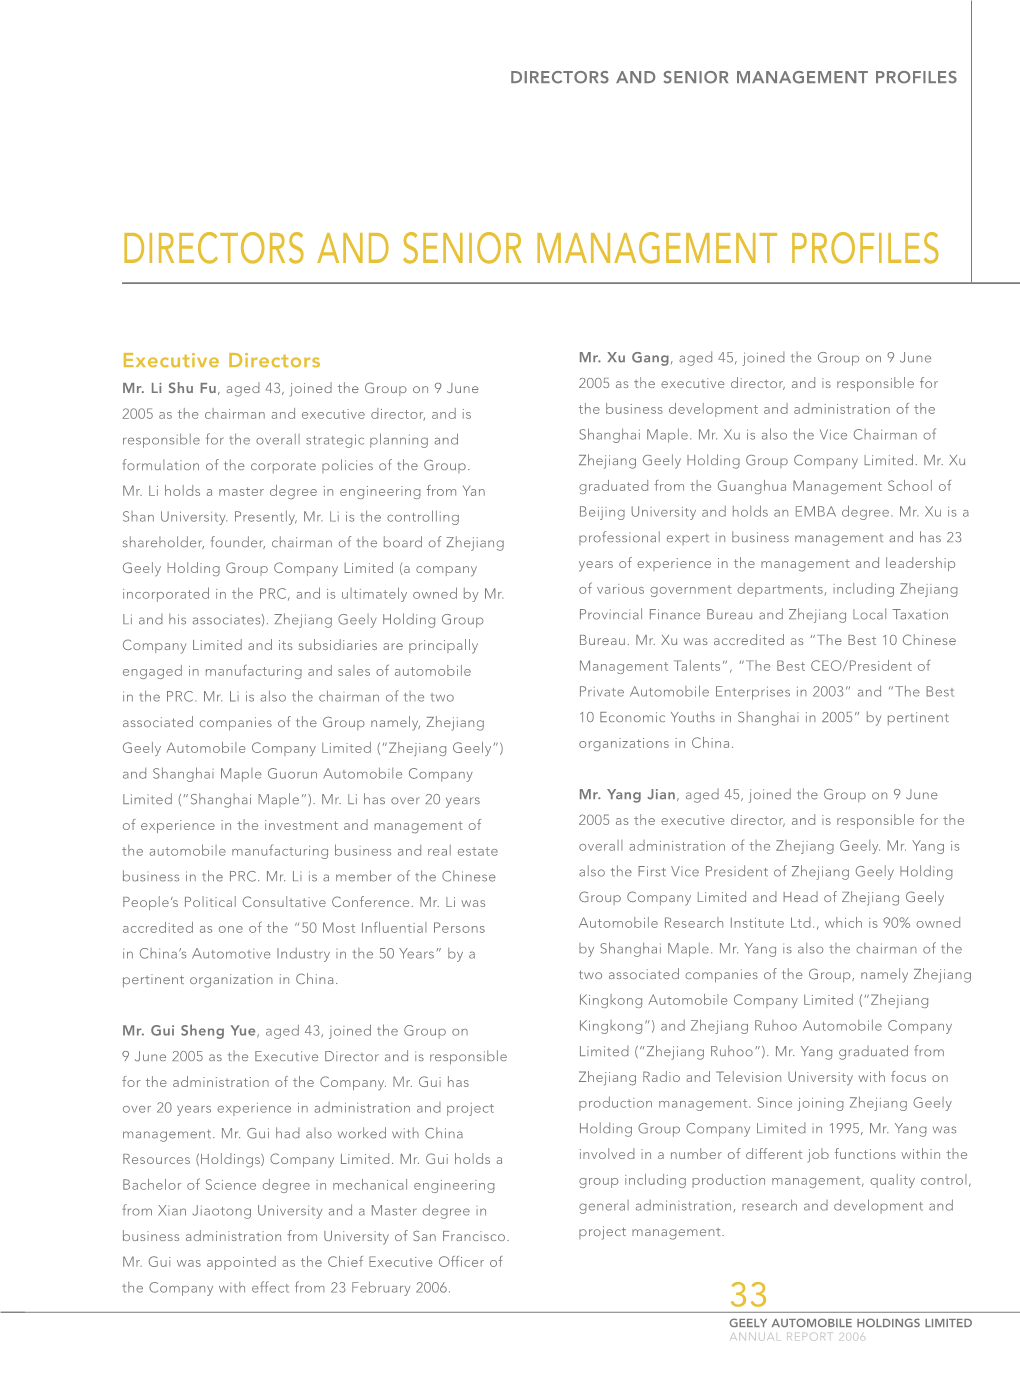 Directors and Senior Management Profiles